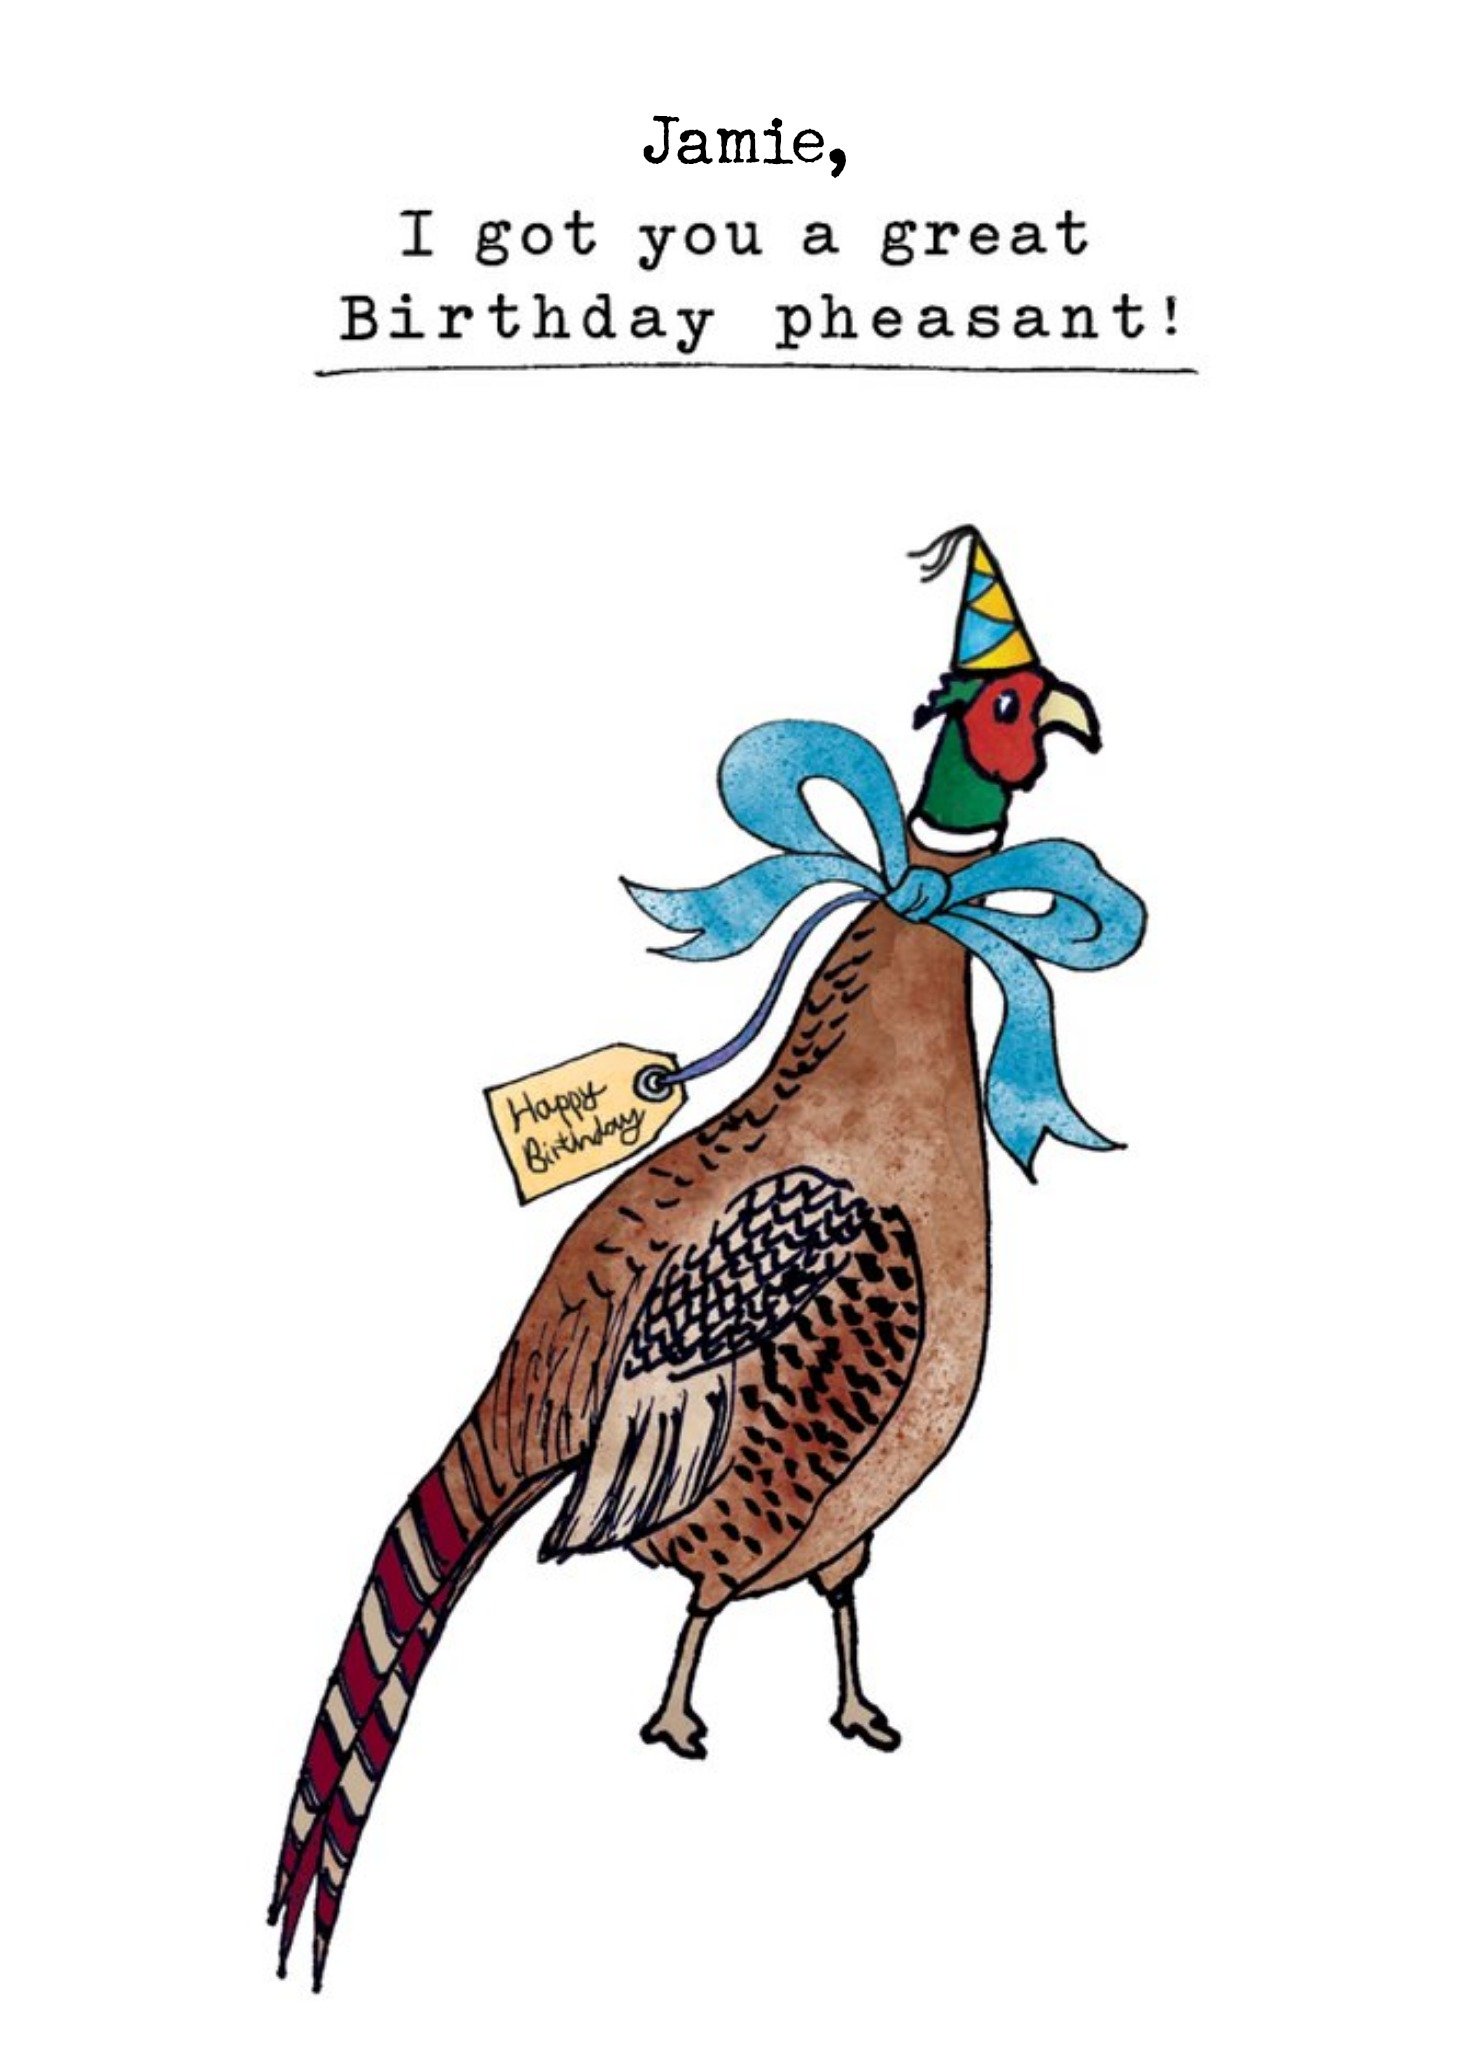 Other London Studio Puntastic Got You A Present Pheasant Birthday Card Ecard